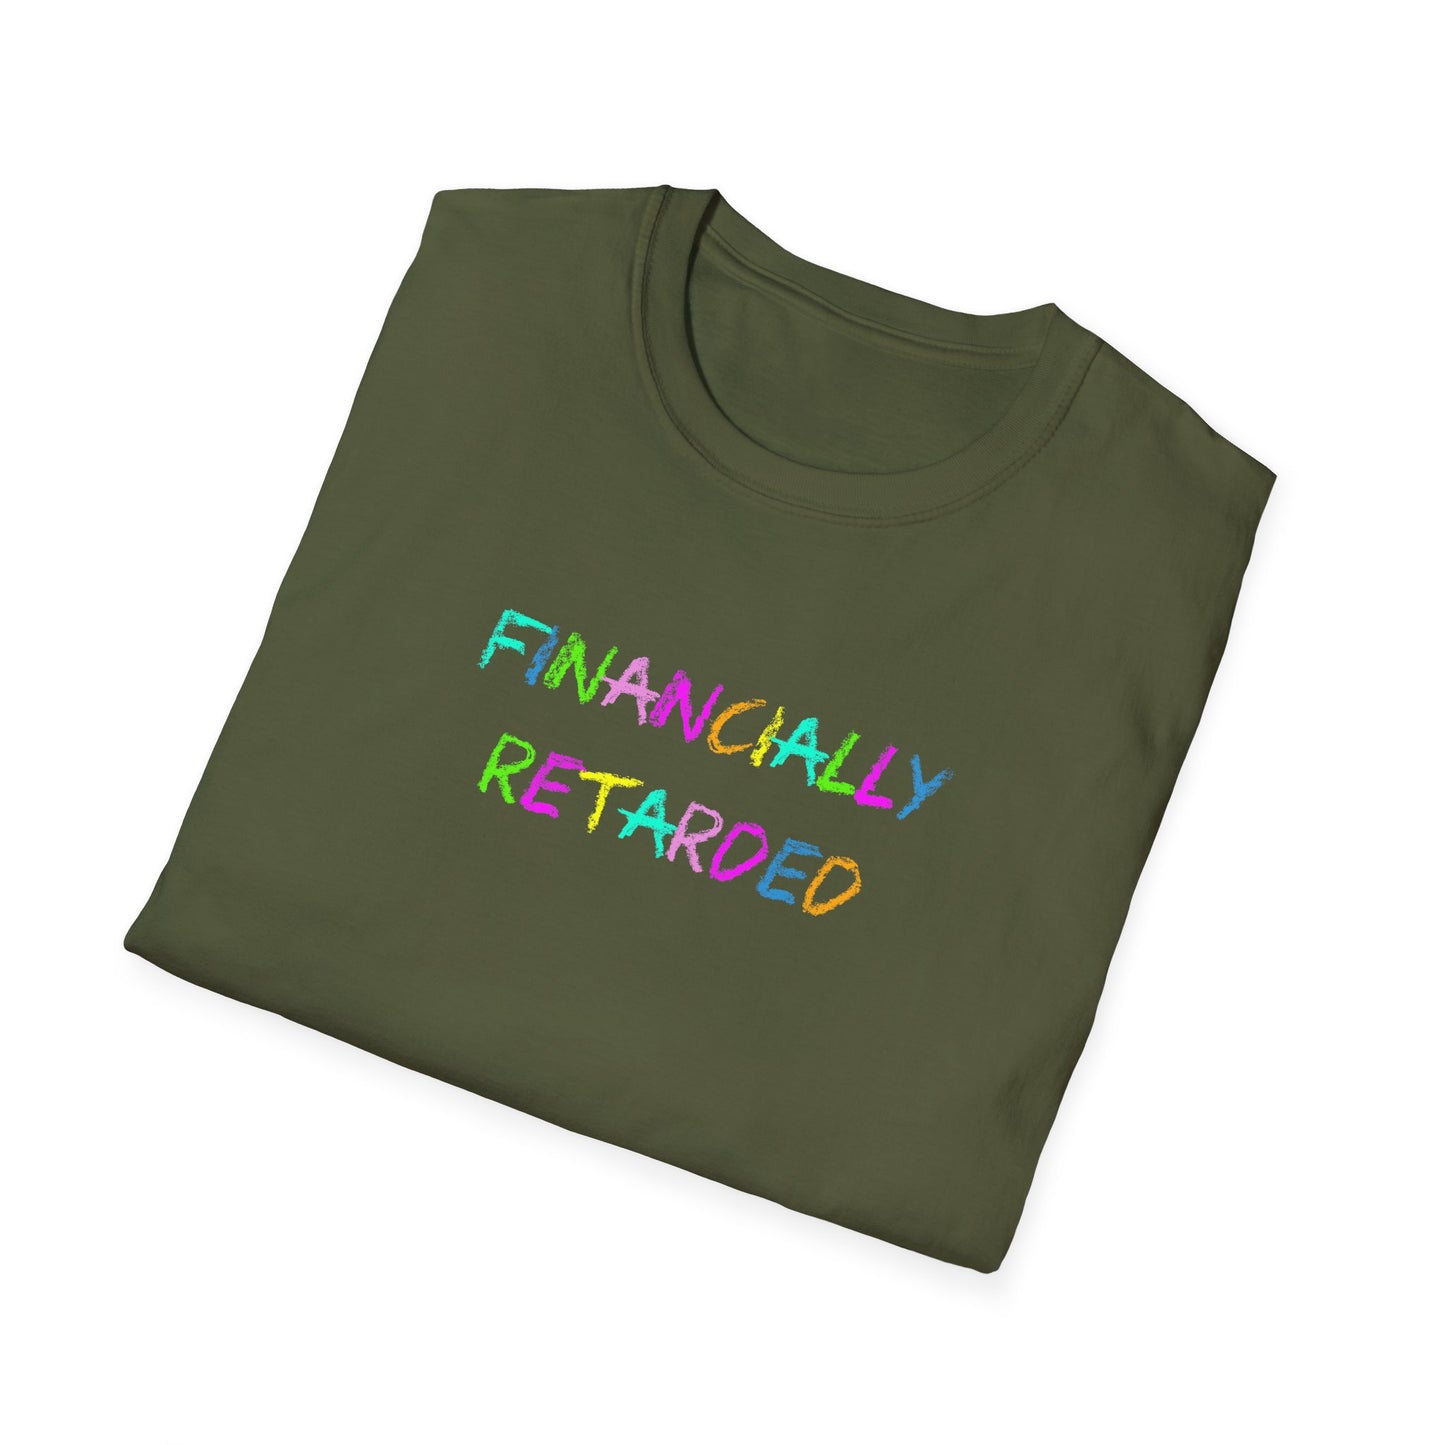 Financially Retarded - T-Shirt